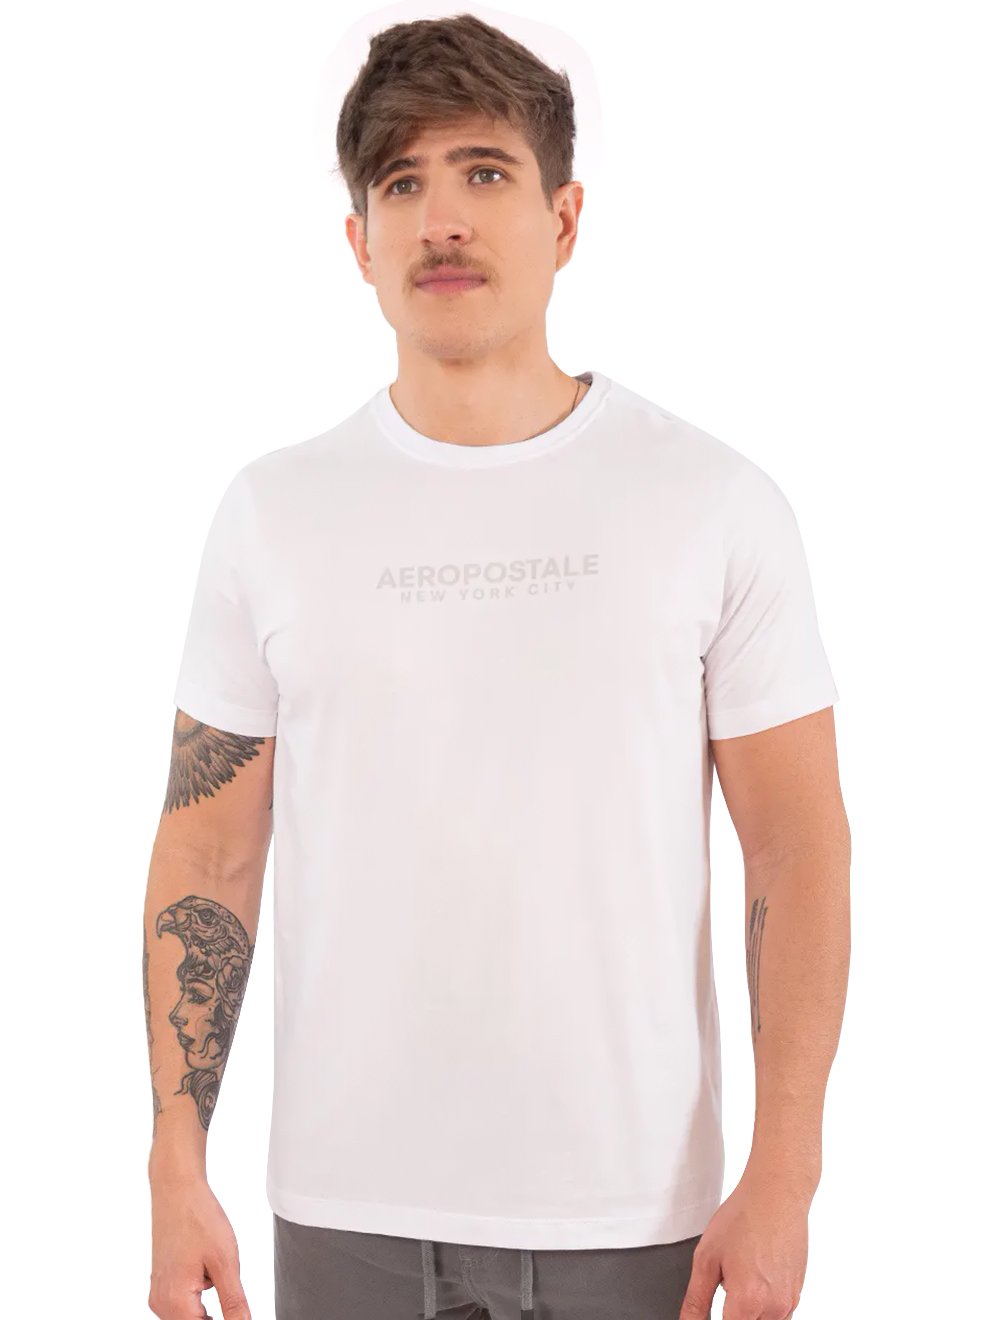 Camiseta Aeropostale Masculina Colors New York City Branca